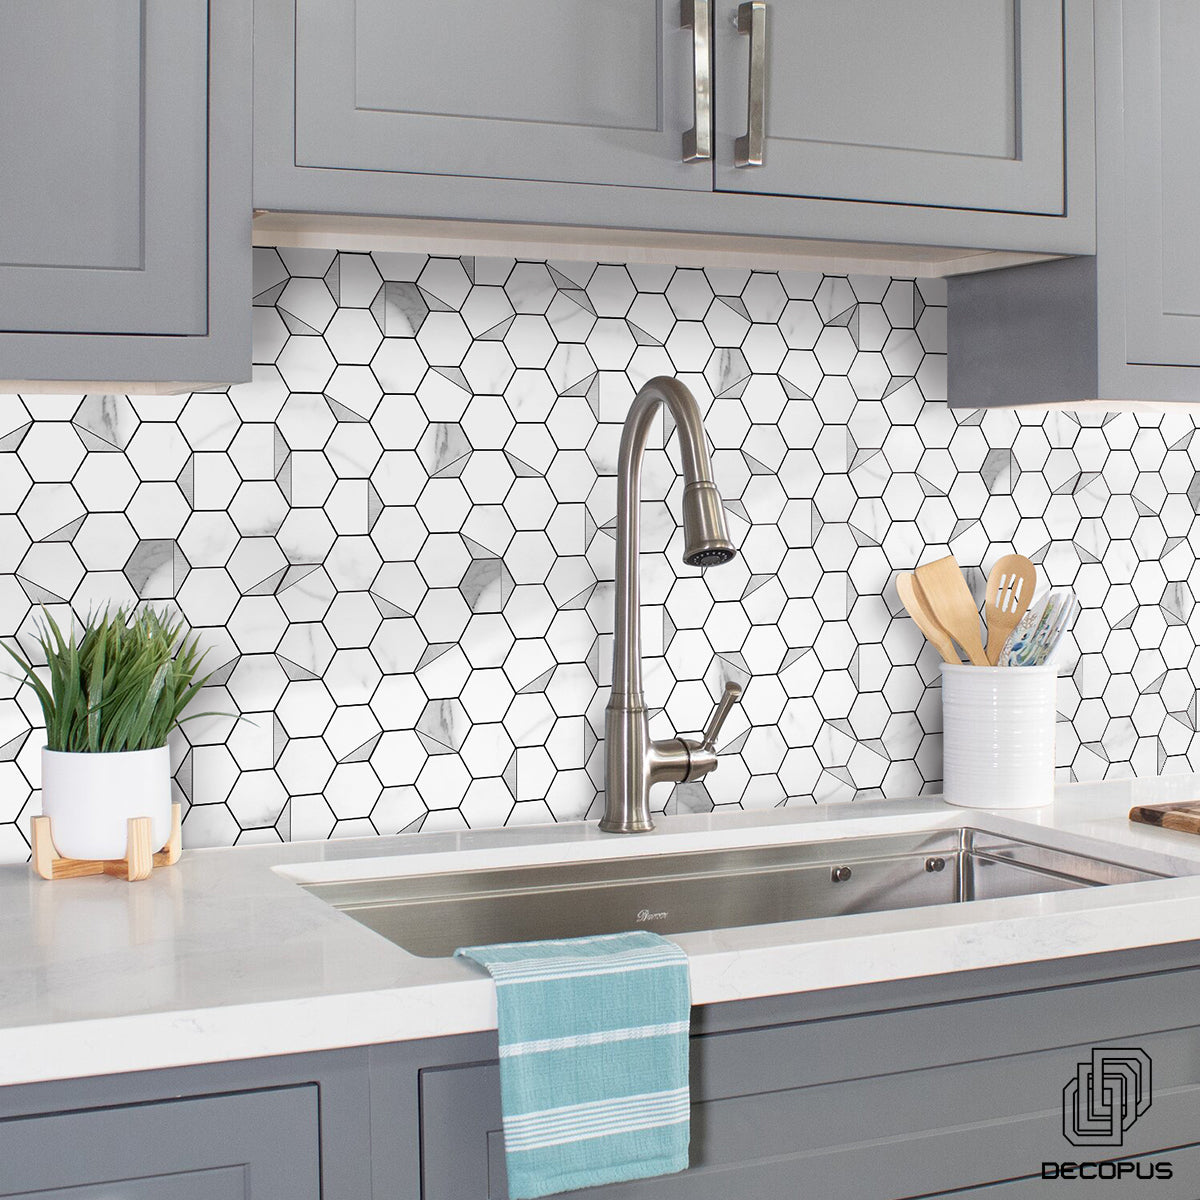 Decopus Faux Stone Tile Peel and Stick (Hexagon White Marble Silver Rim, 5pk) for Kitchen Backsplash, Bathroom Tile Self Adhesive